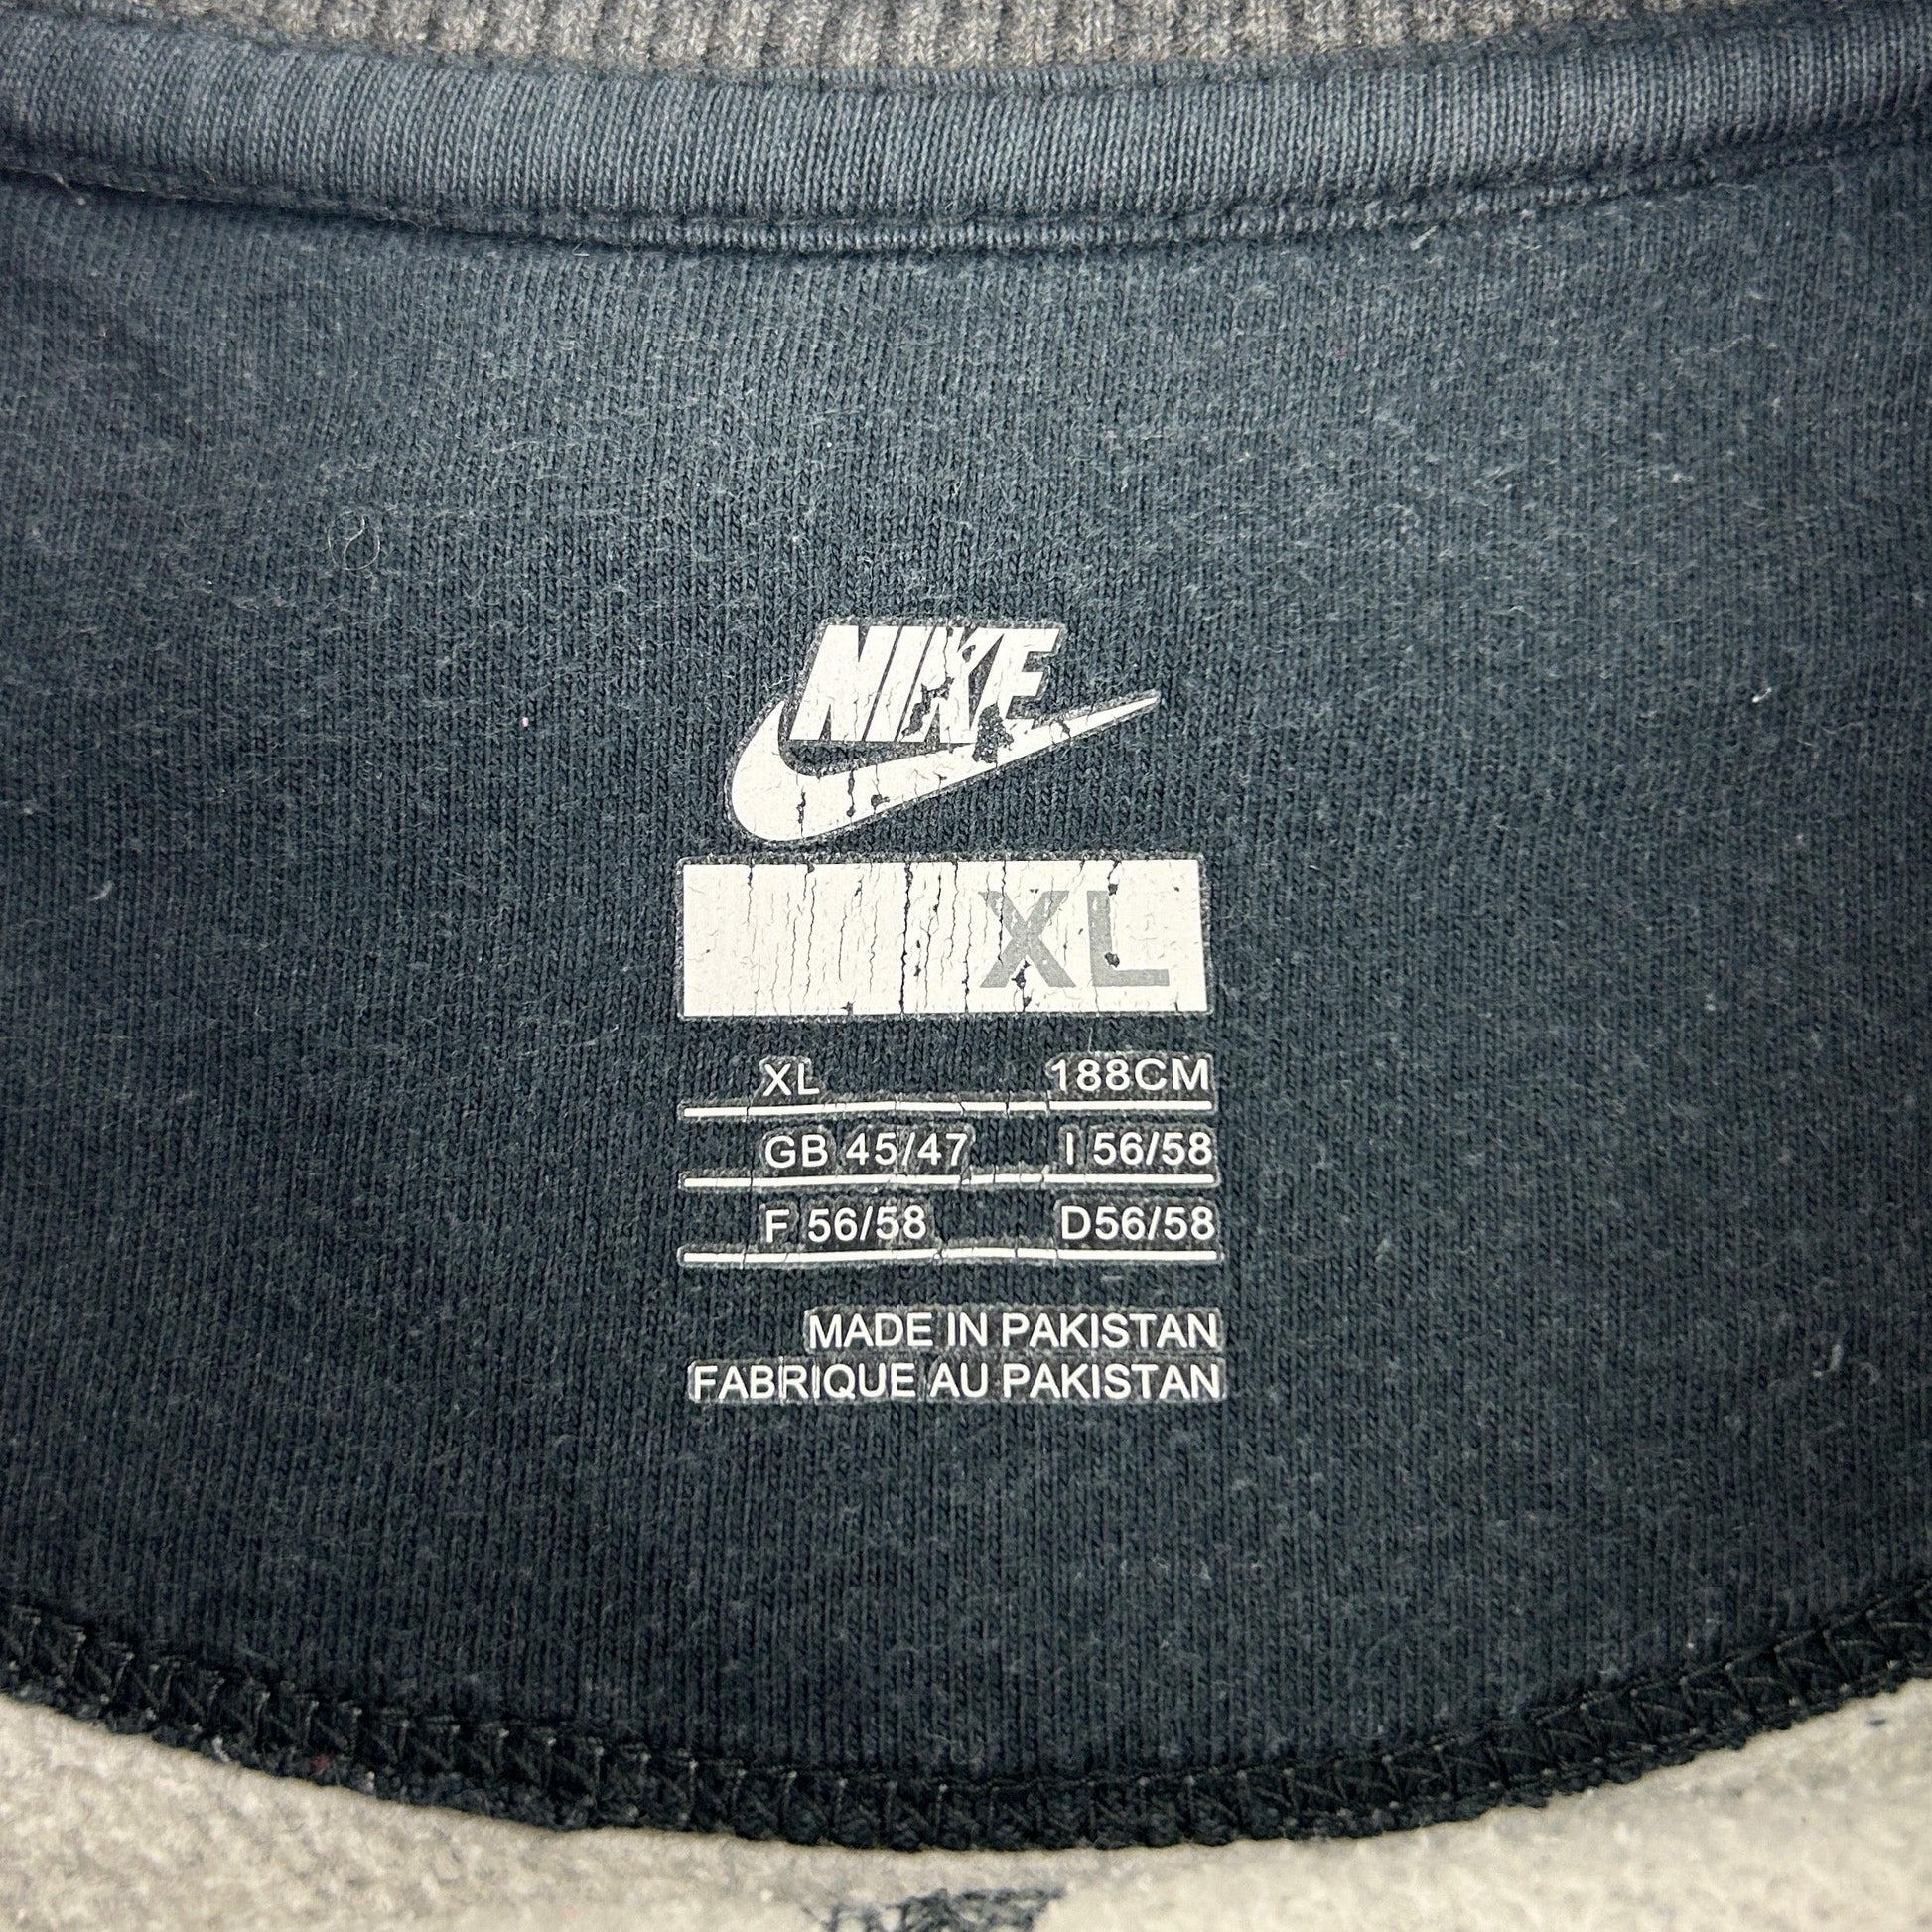 Nike Sweatshirt Size XL - Known Source